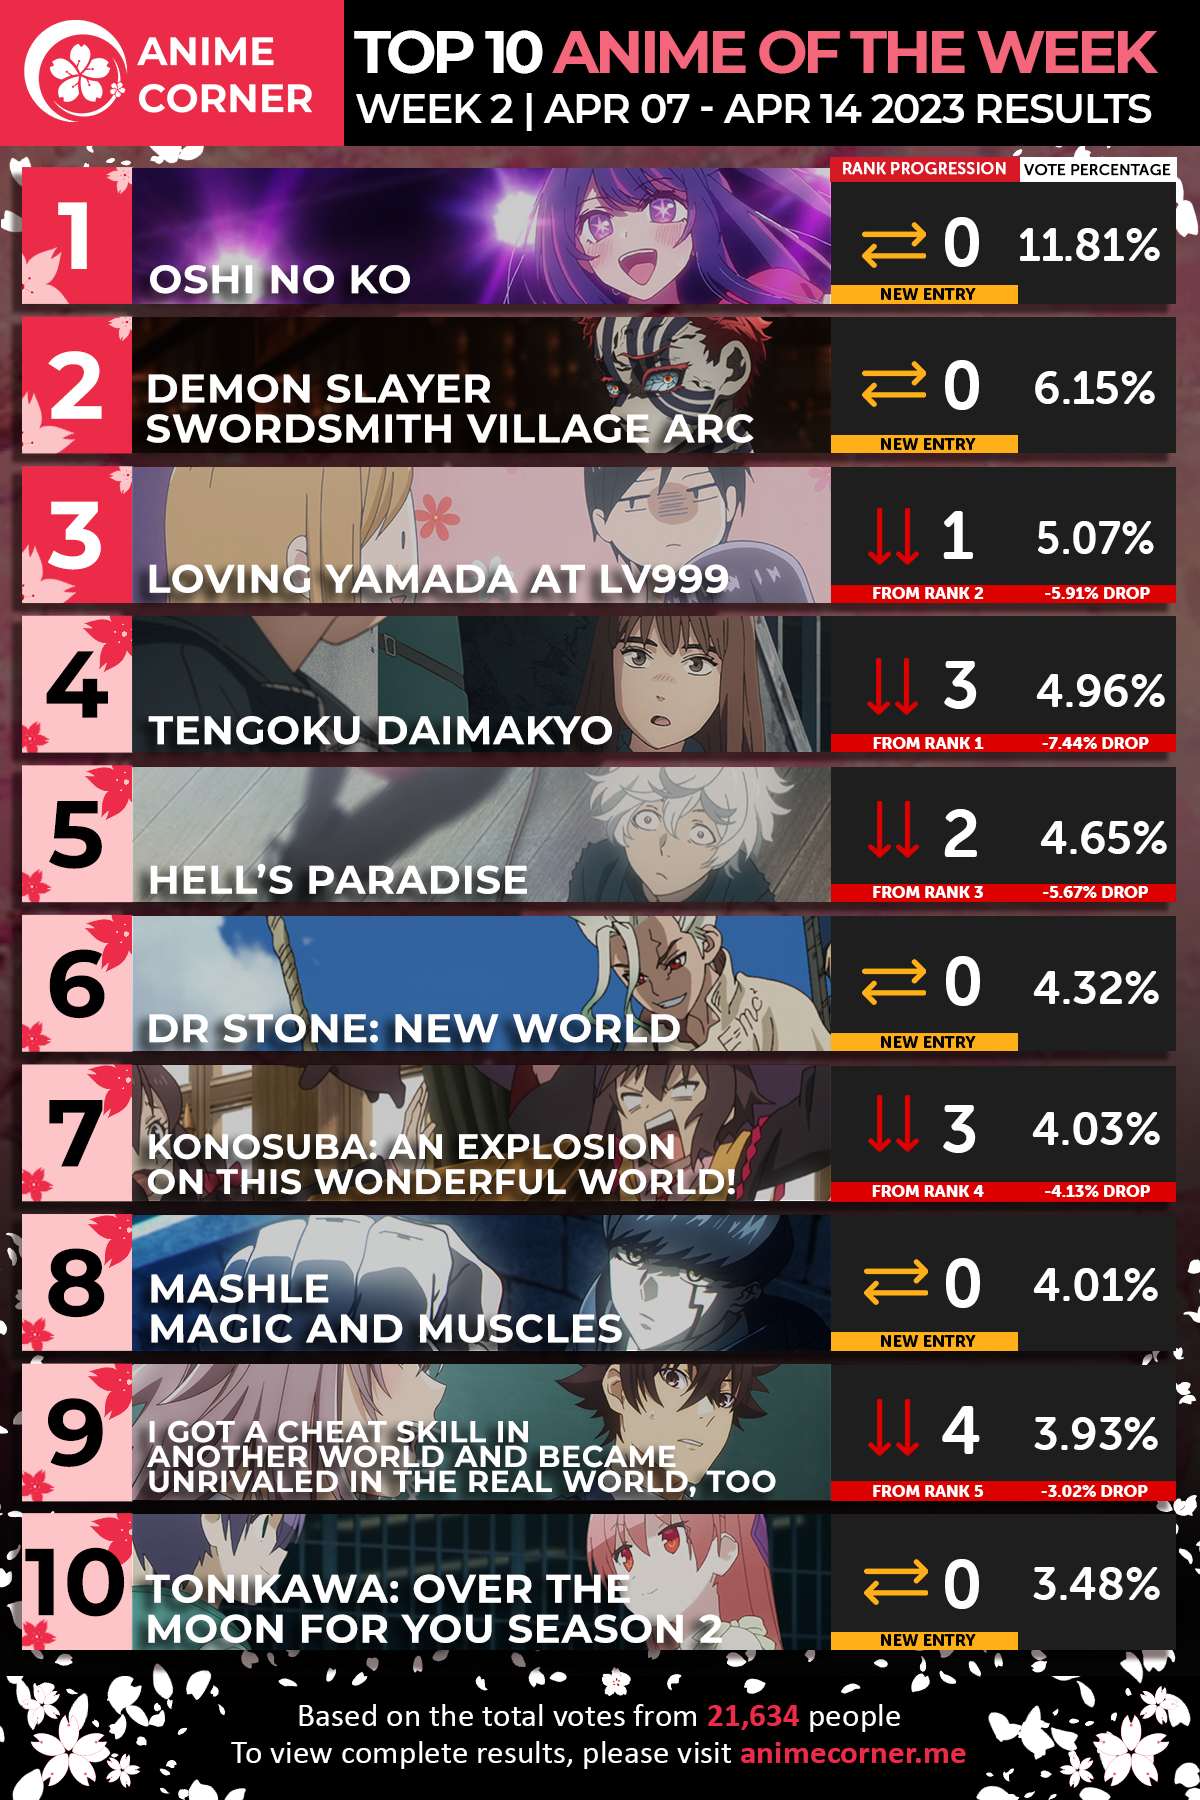 oshi no ko best anime ranking week 2 